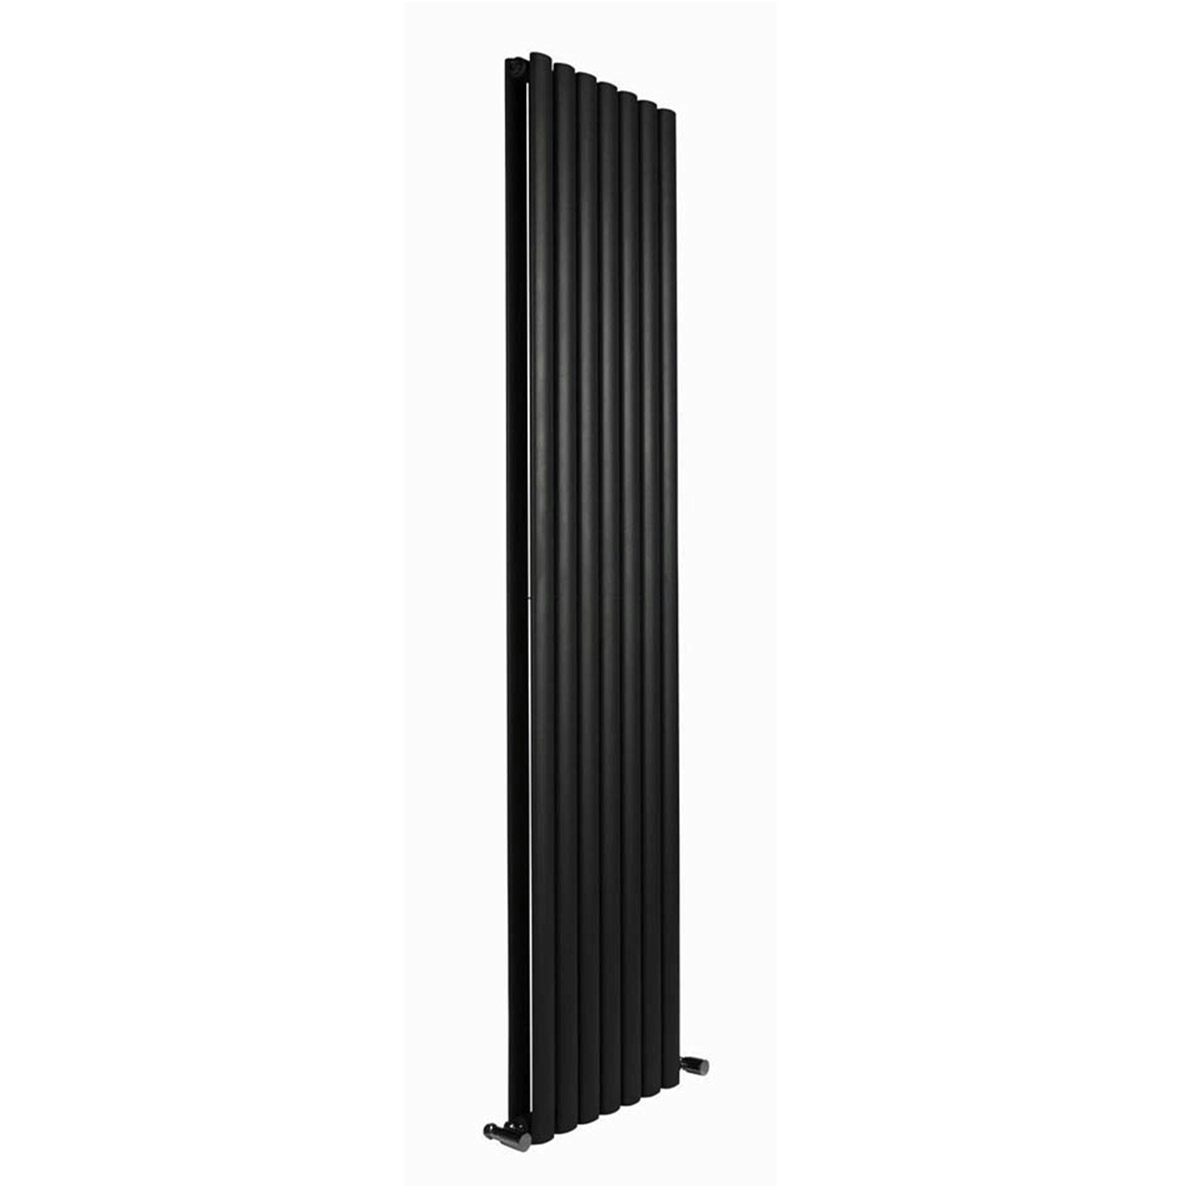 Reina Neva anthracite grey double vertical steel designer radiator 1800 x 531